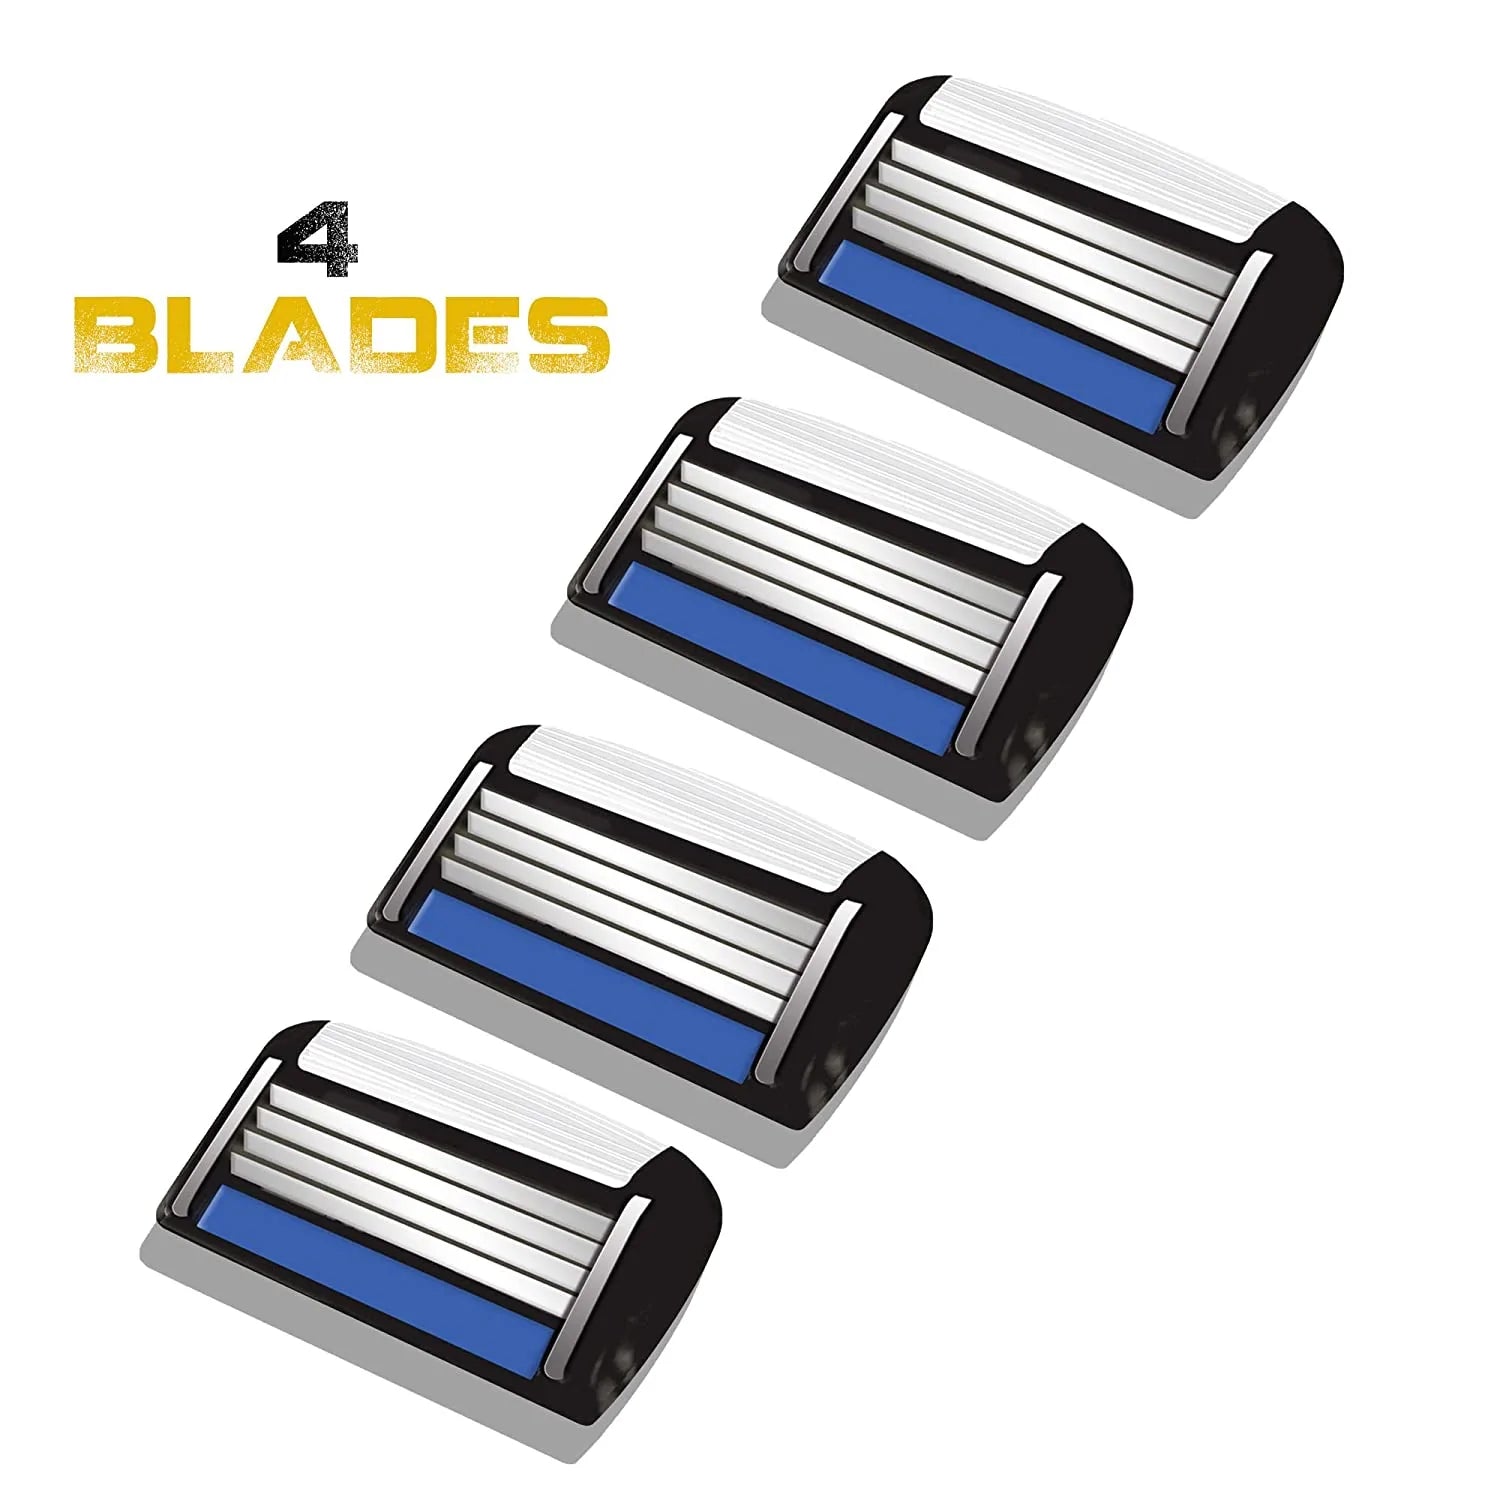 Blade Cartridge Refills HB4 4 cartridges (new package design)